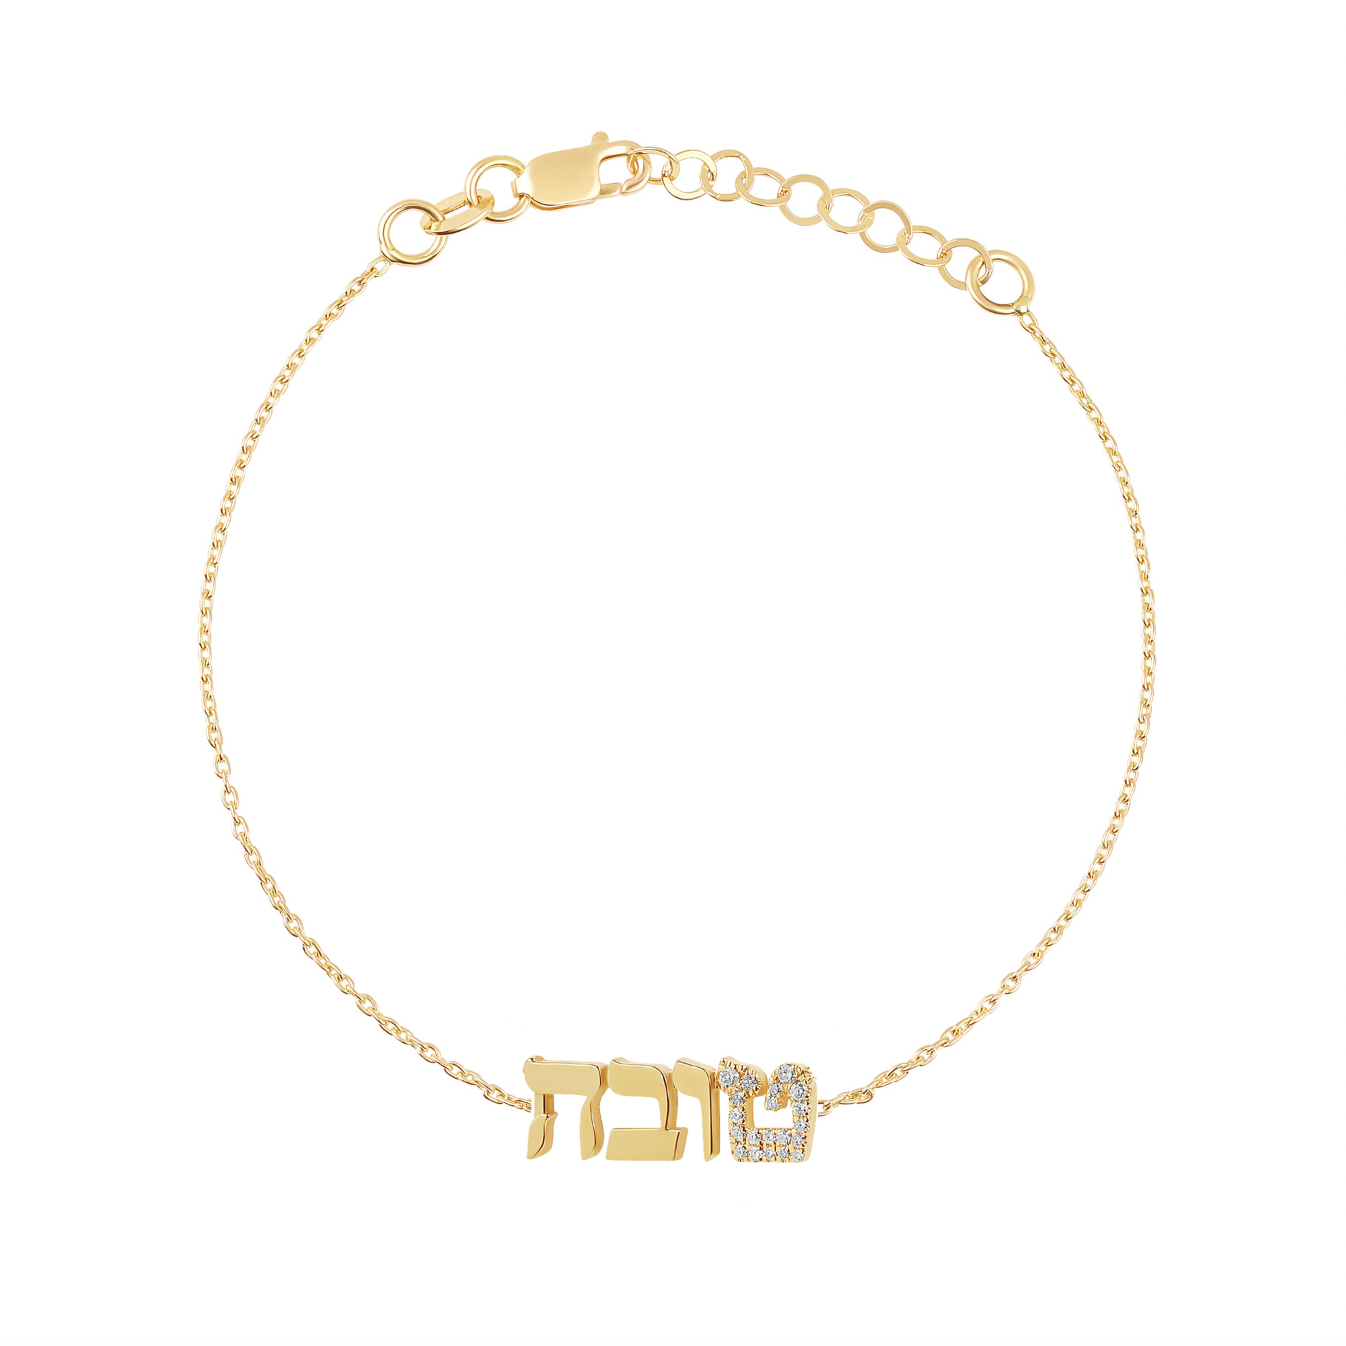 Diamond Accent Initial Hebrew Name Bracelet